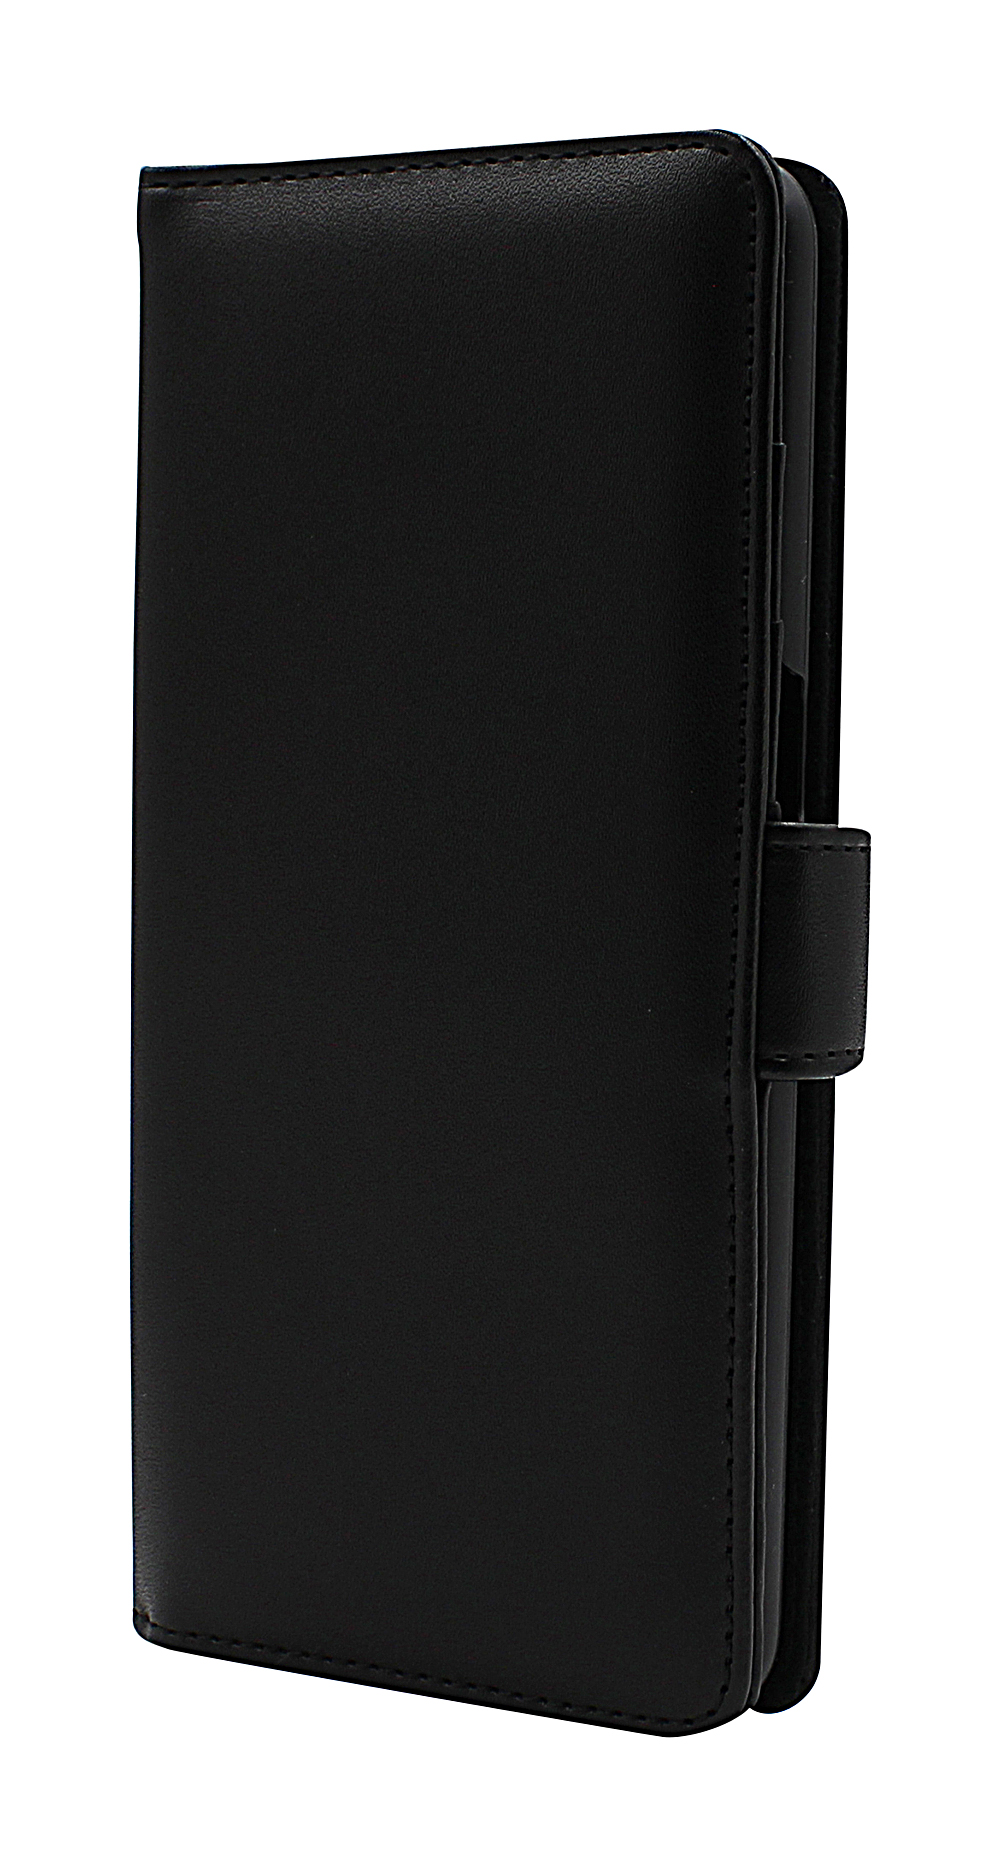 Skimblocker Lommebok-etui OnePlus Nord N10